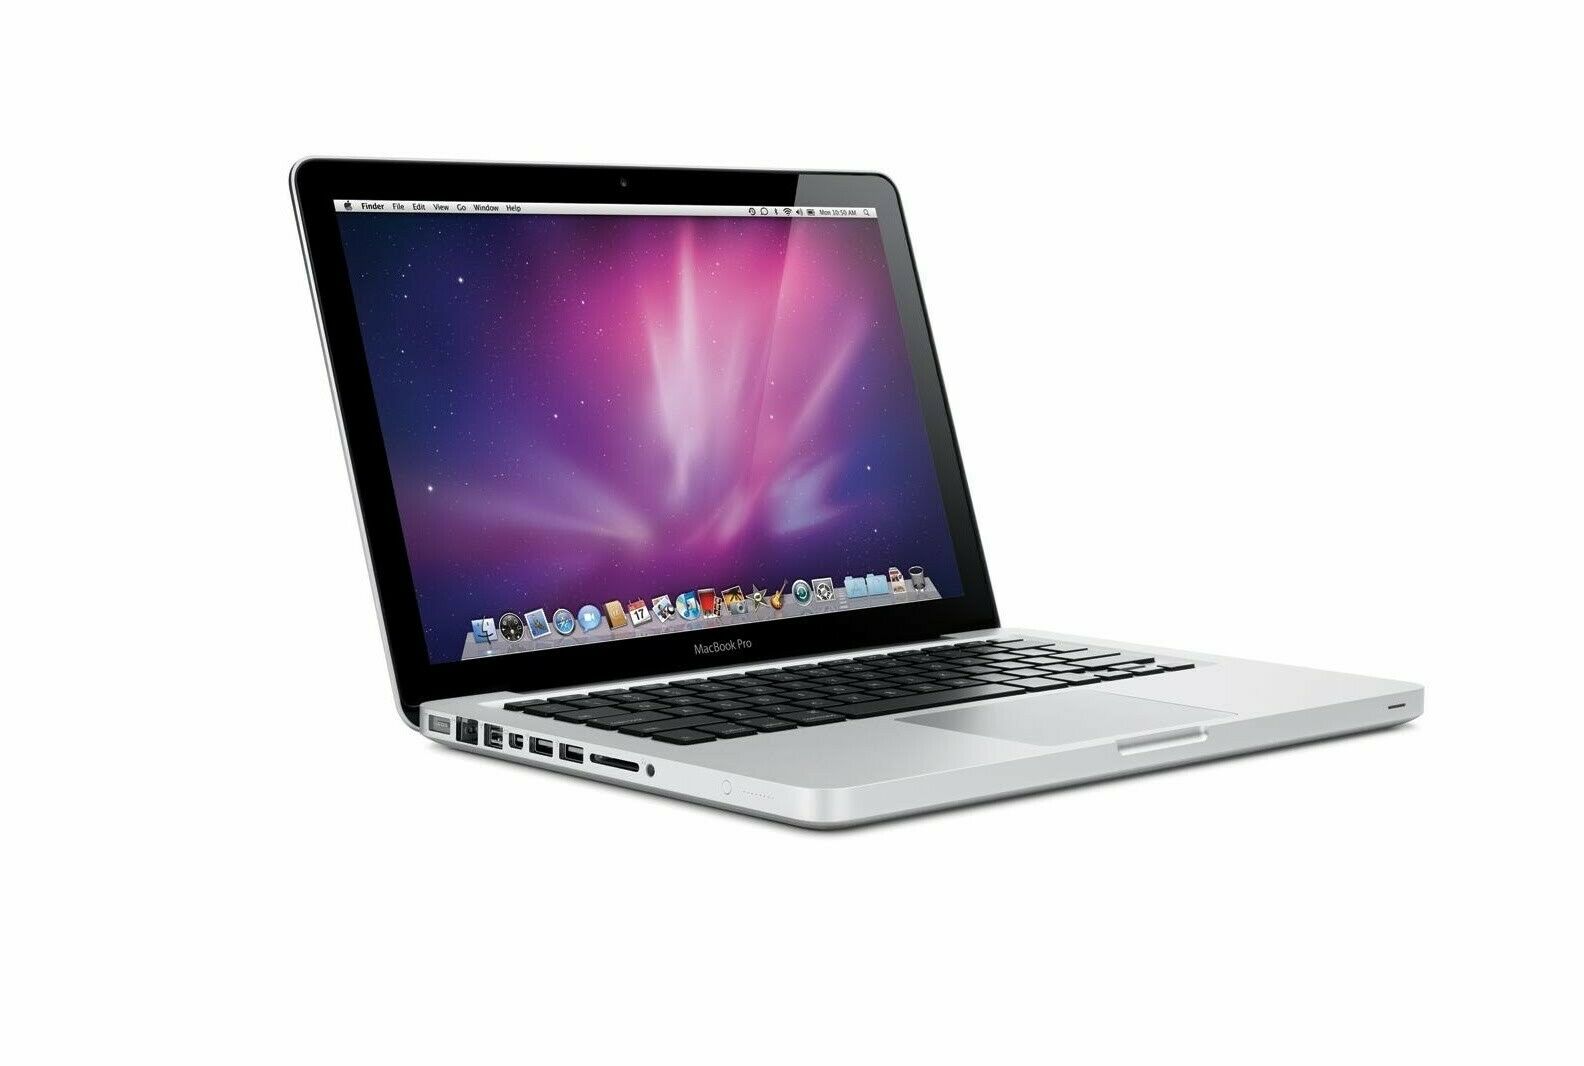 Apple Macbook A1278 2012 Intel Core i5-3210M 2.50GHz 4GB RAM 500GB HDD Catalina